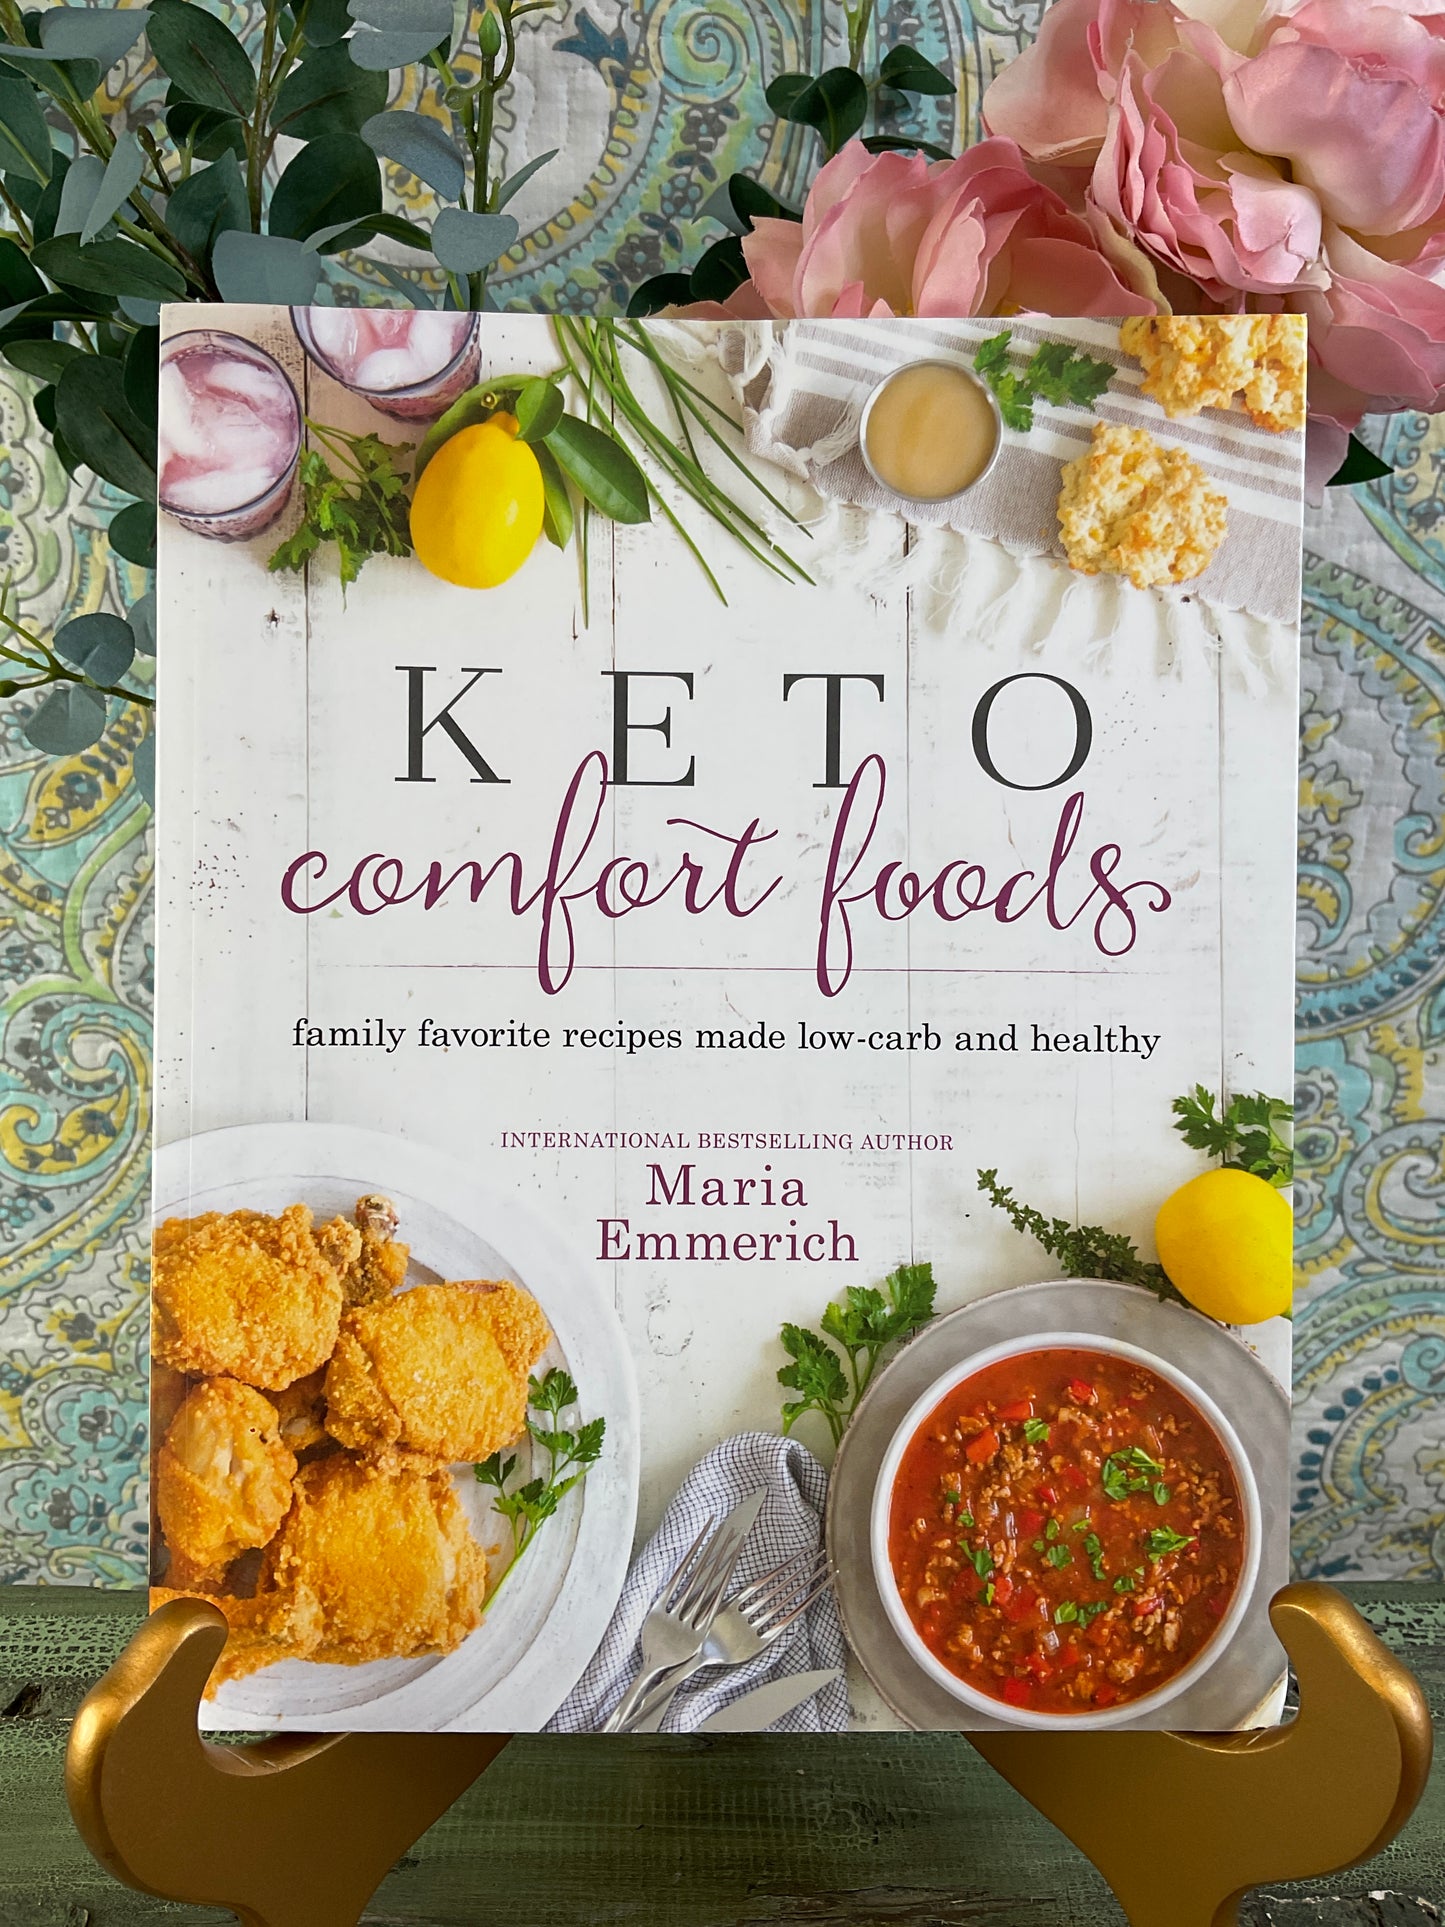 Keto Paperback Cookbooks, 4